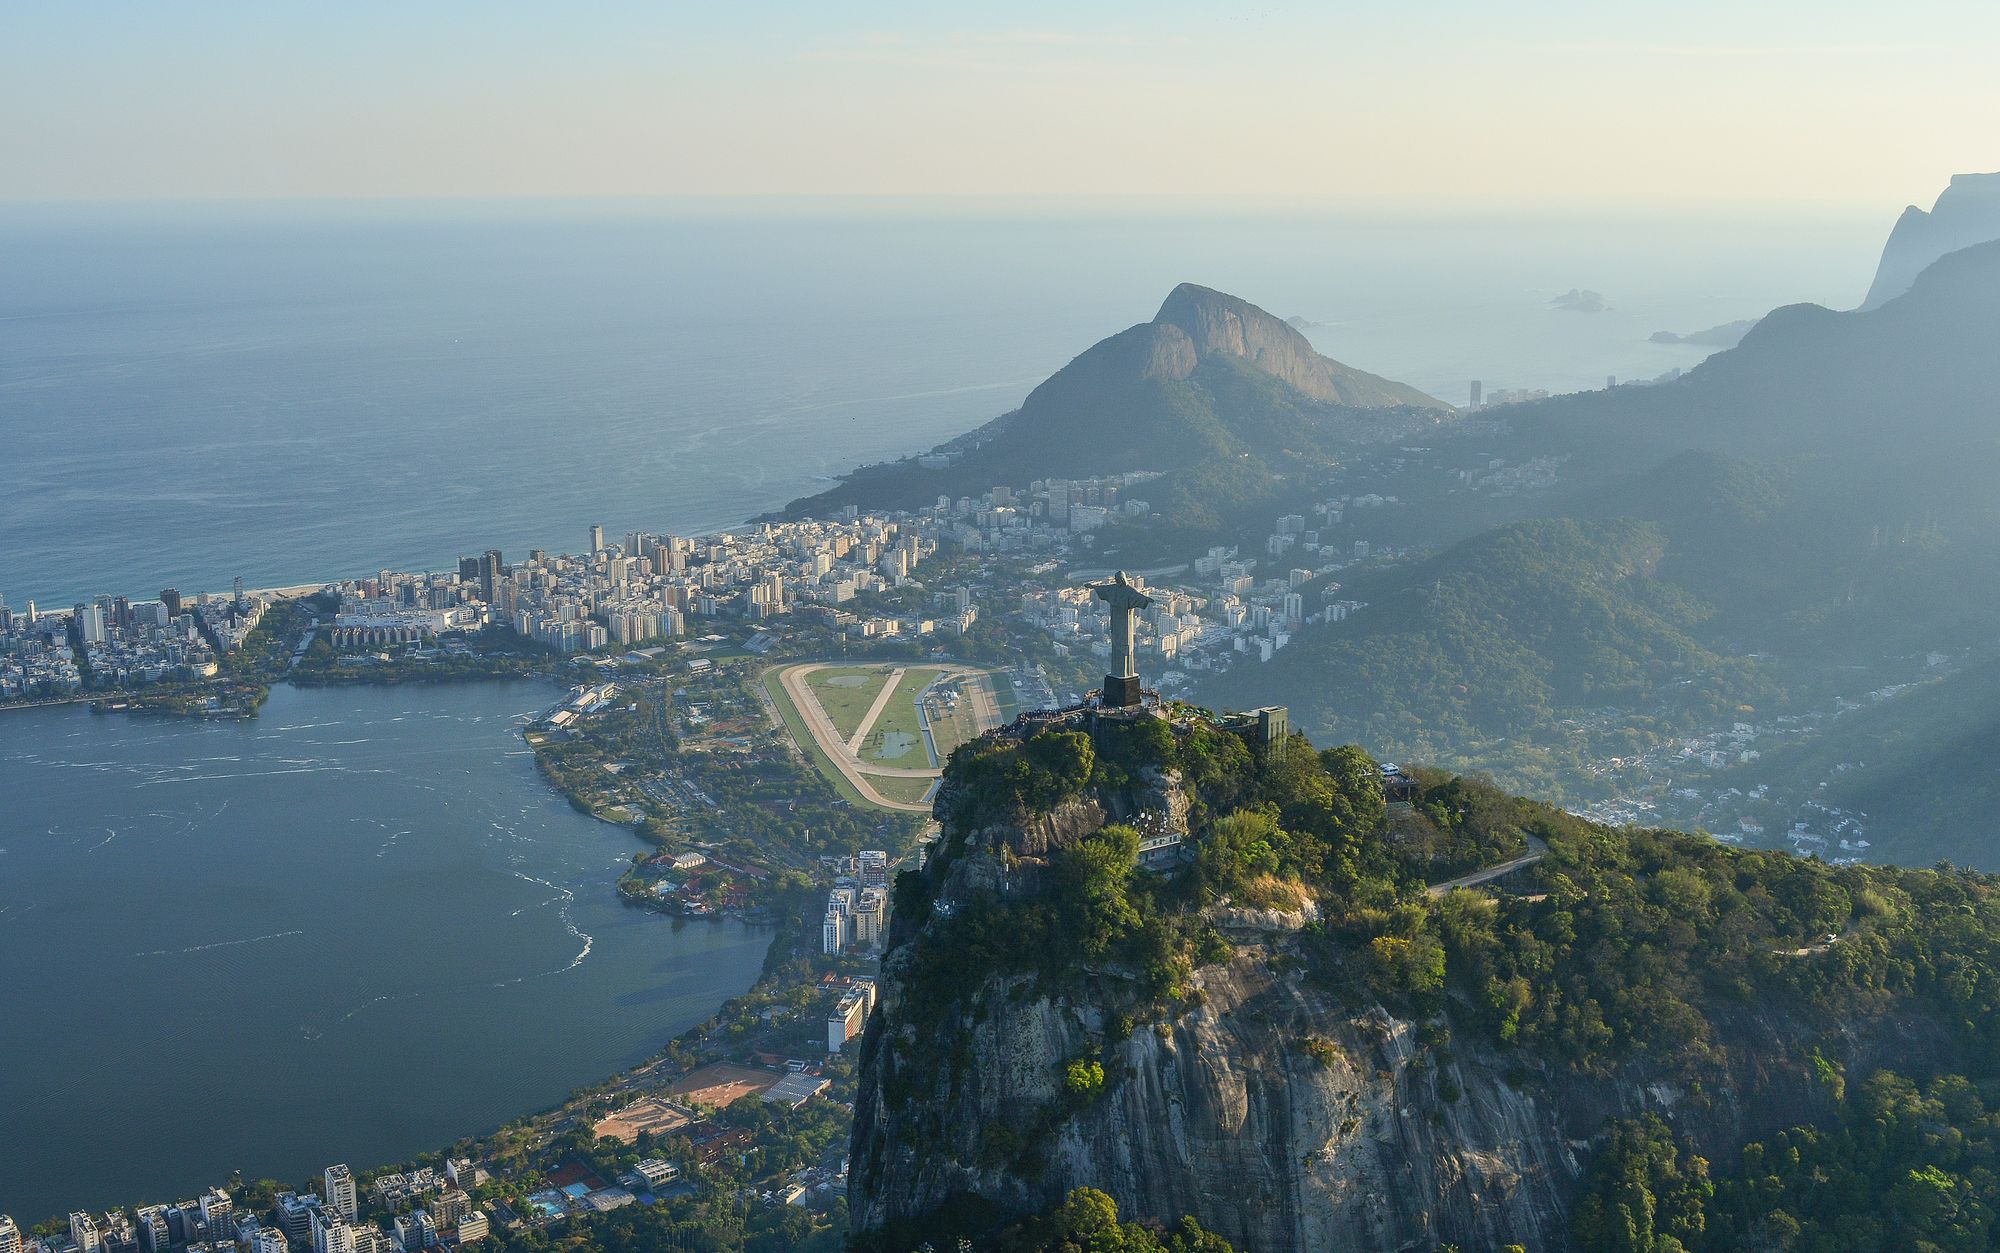 Christ the Redeemer statue looms above Rio de Janeiro and ocean